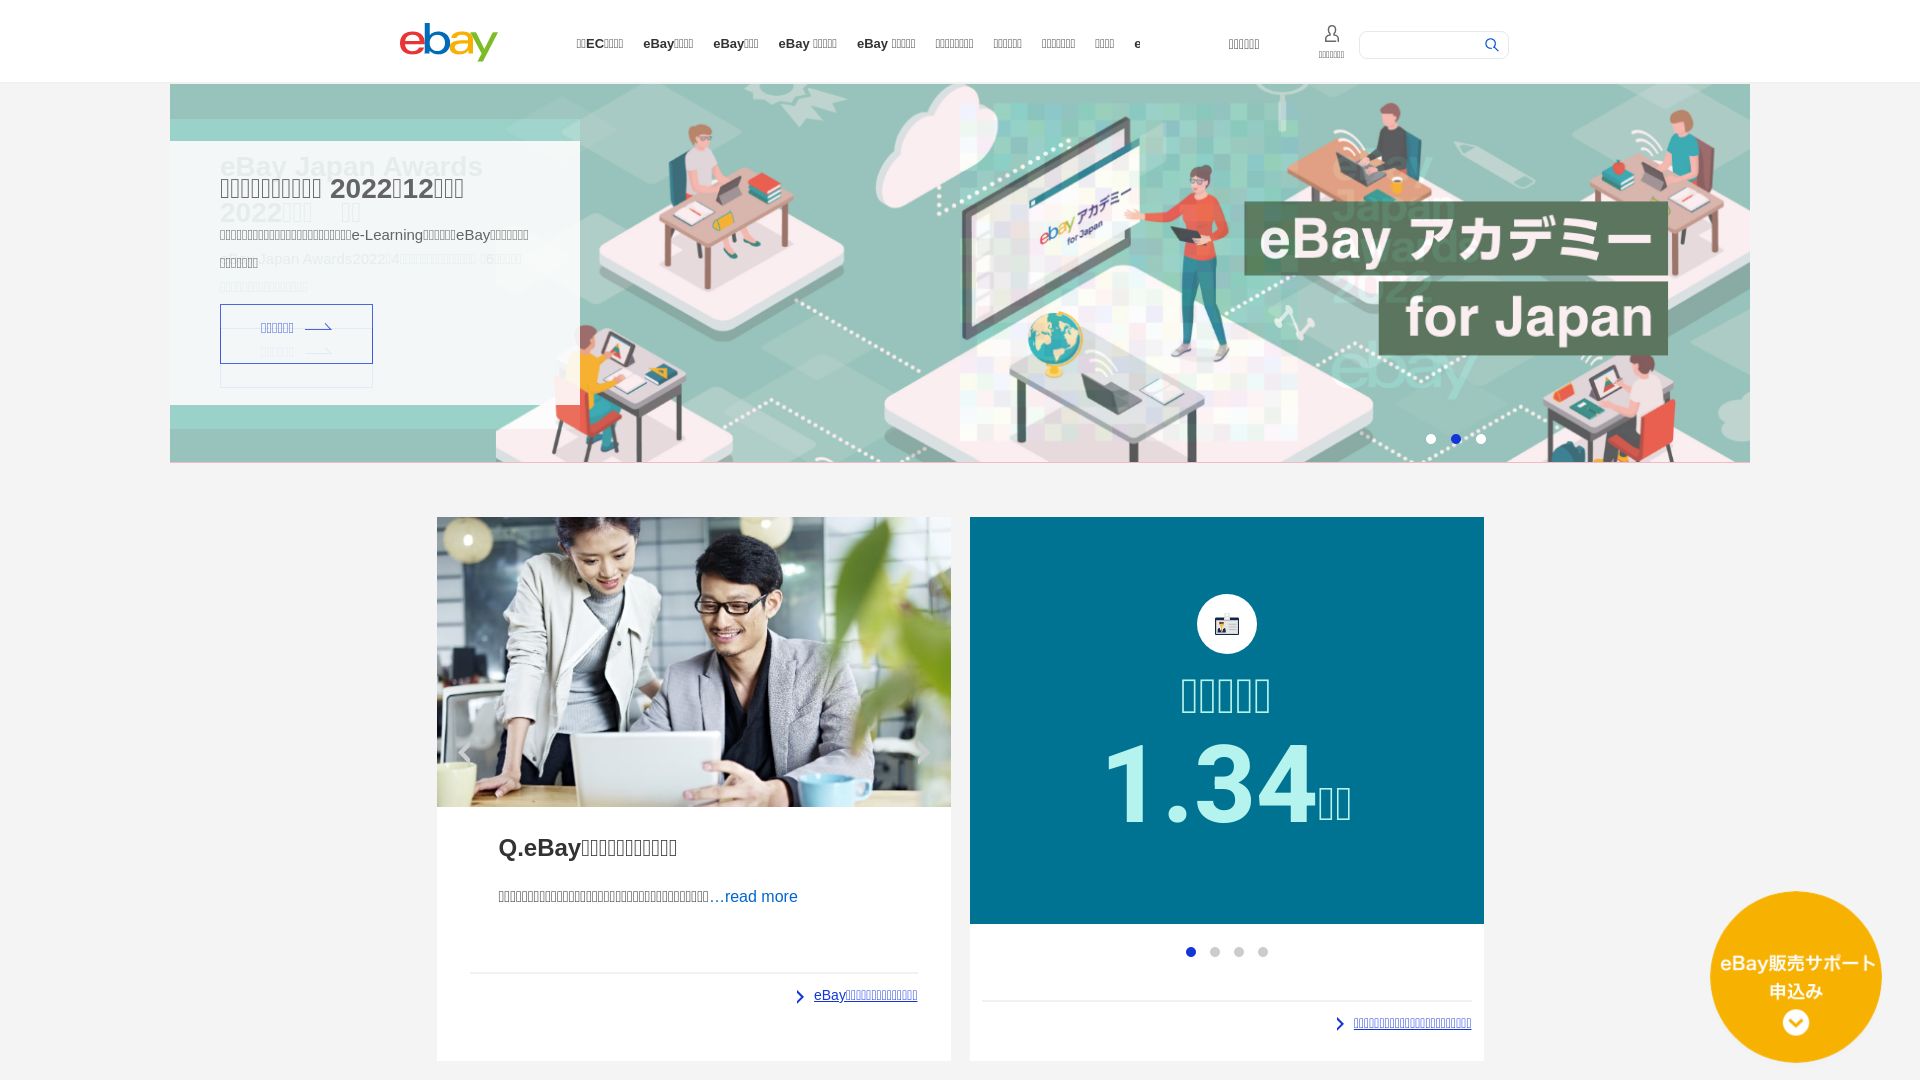 вебсайт ebay.co.jp Є   ONLINE